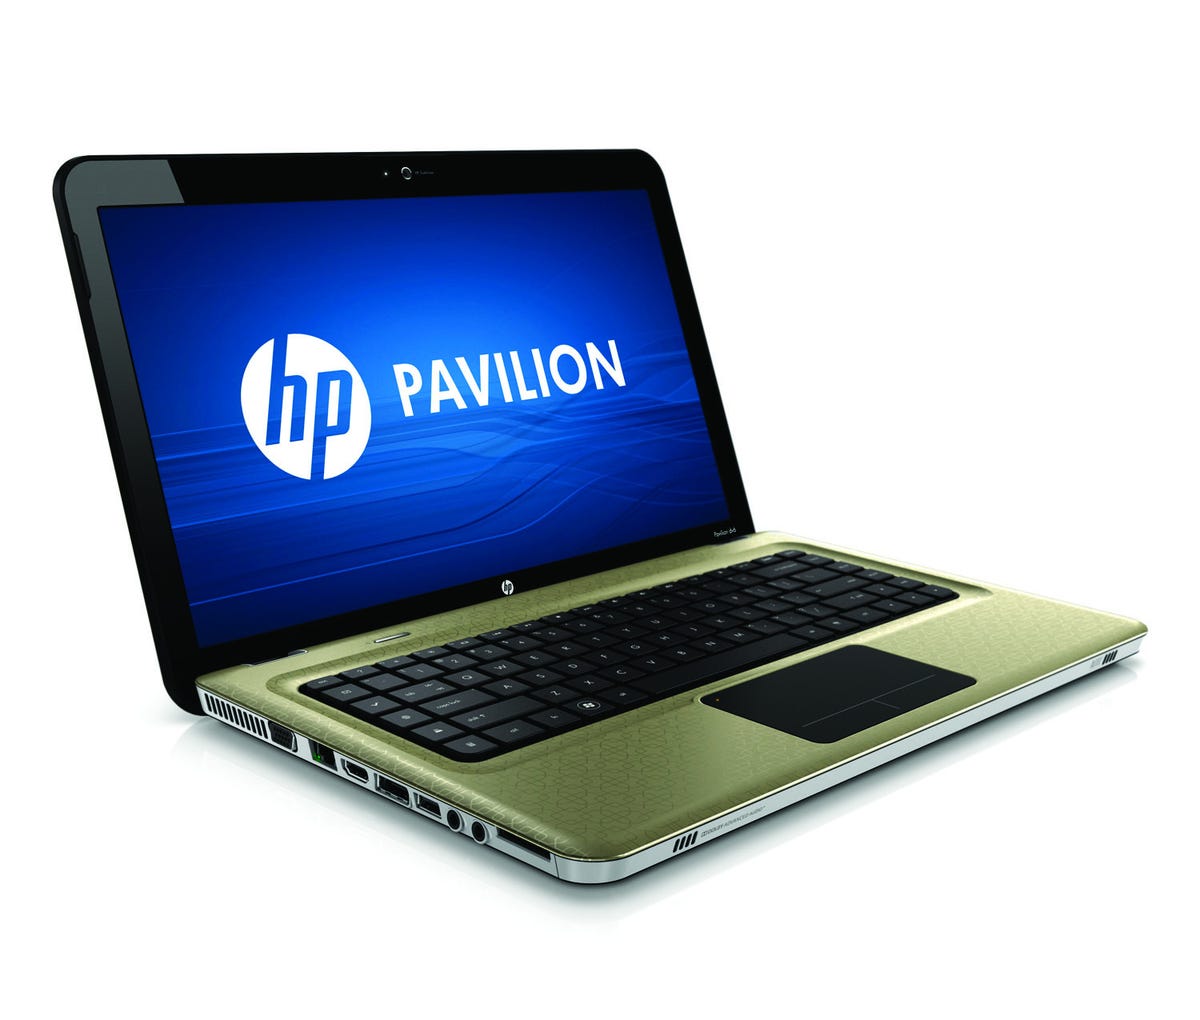 HP_Pavilion_dv6_Entertainment_PC,_champagne,_front_right_open.jpg